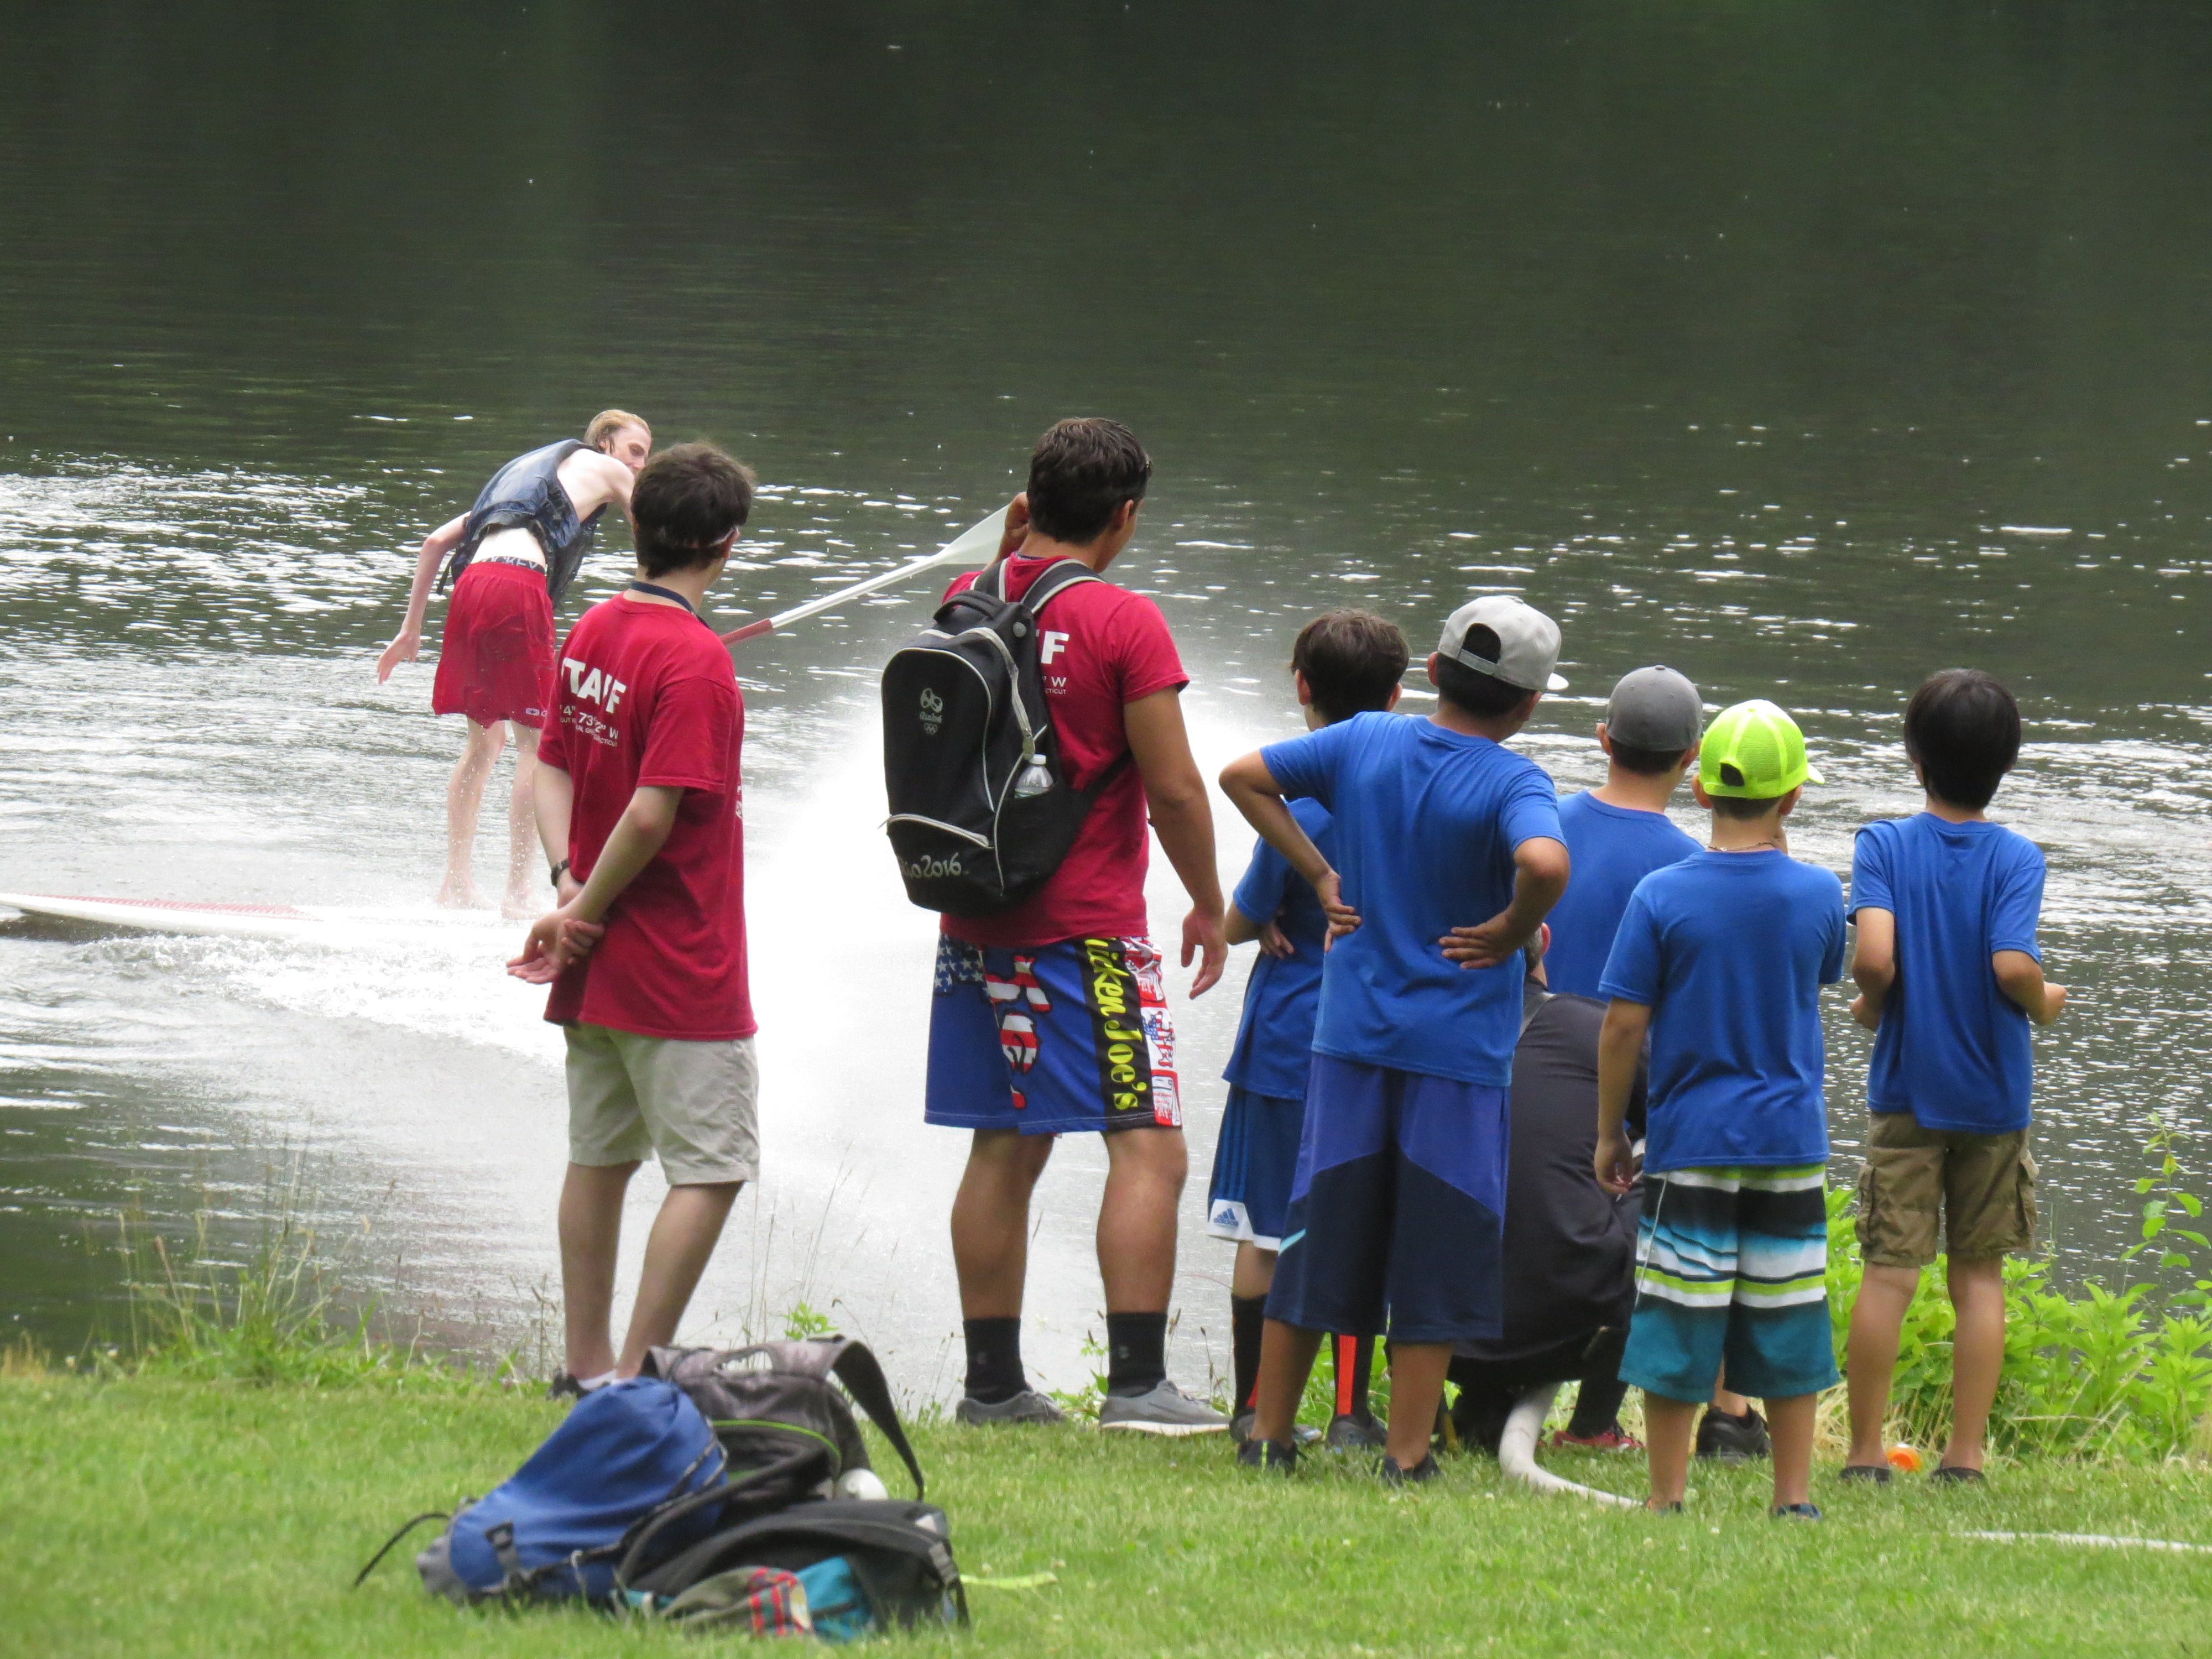 Cub scouts watch staff members get sprayed with water in the lake. June 30, 2017. Photo: Devon Bedoya